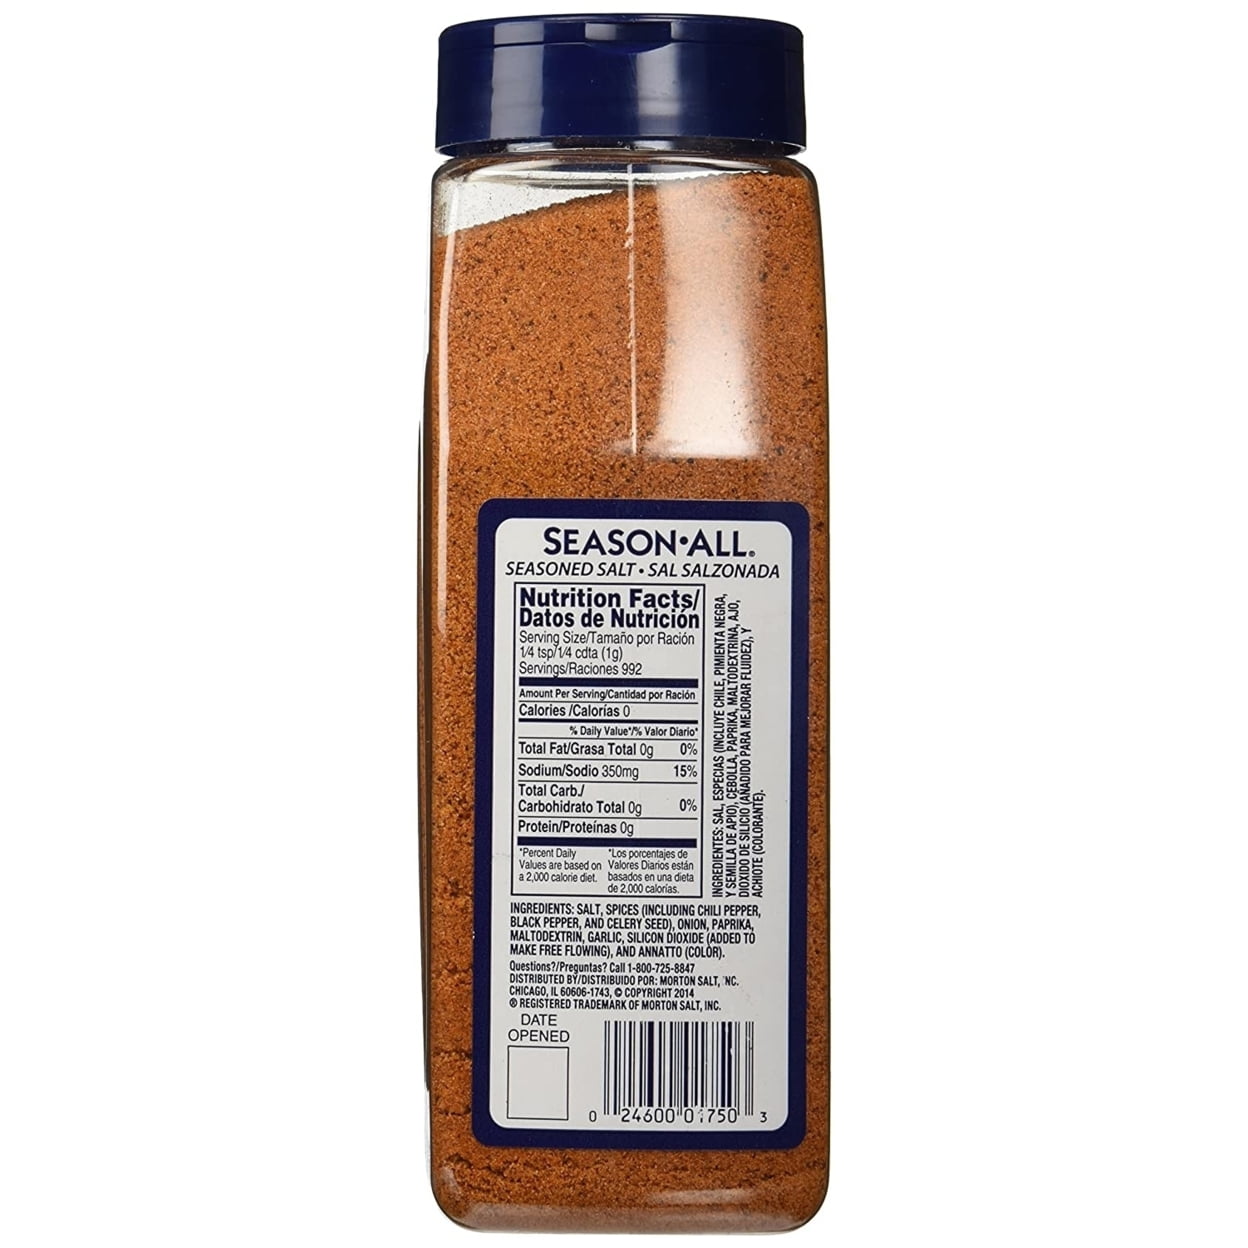  Morton Season-All Seasoned Salt 35oz : Mixed Spices